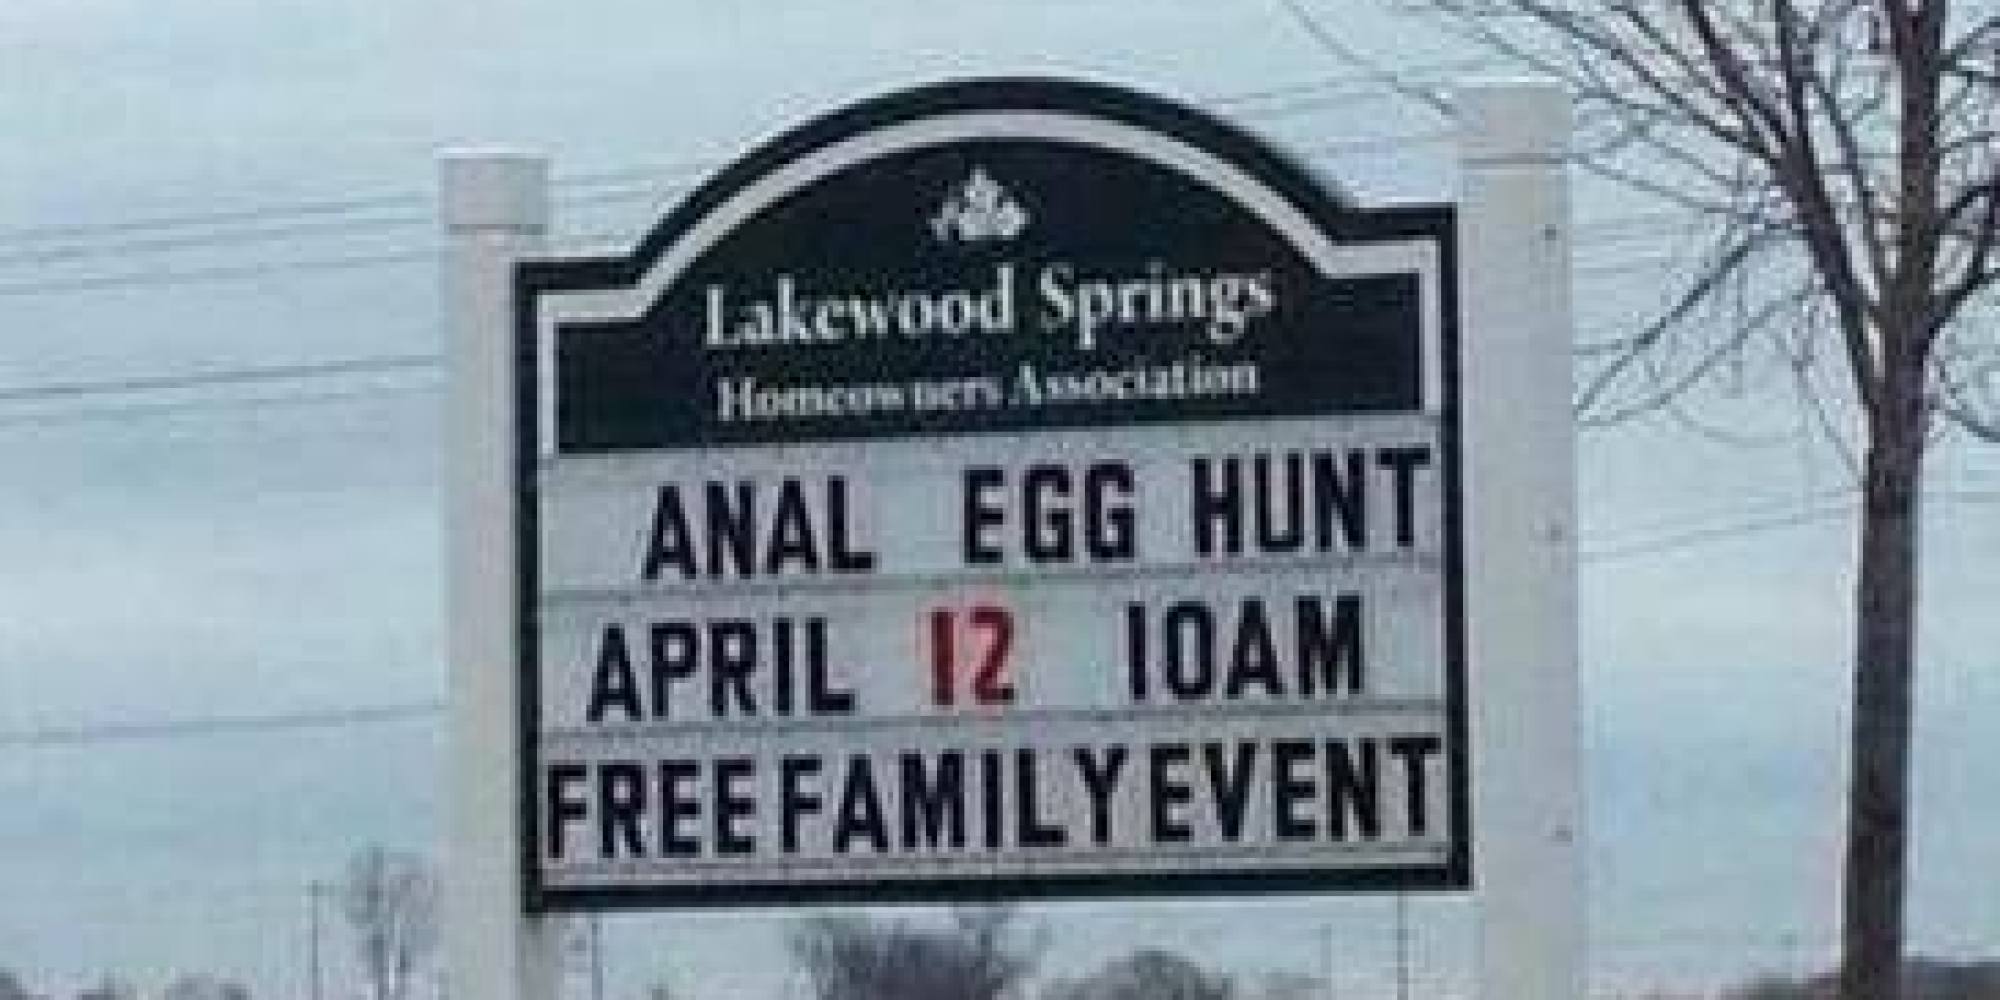 messed up easter - Lakewood Springs Homo en Association Anal Egg Hunt April 12 10AM Free Family Event